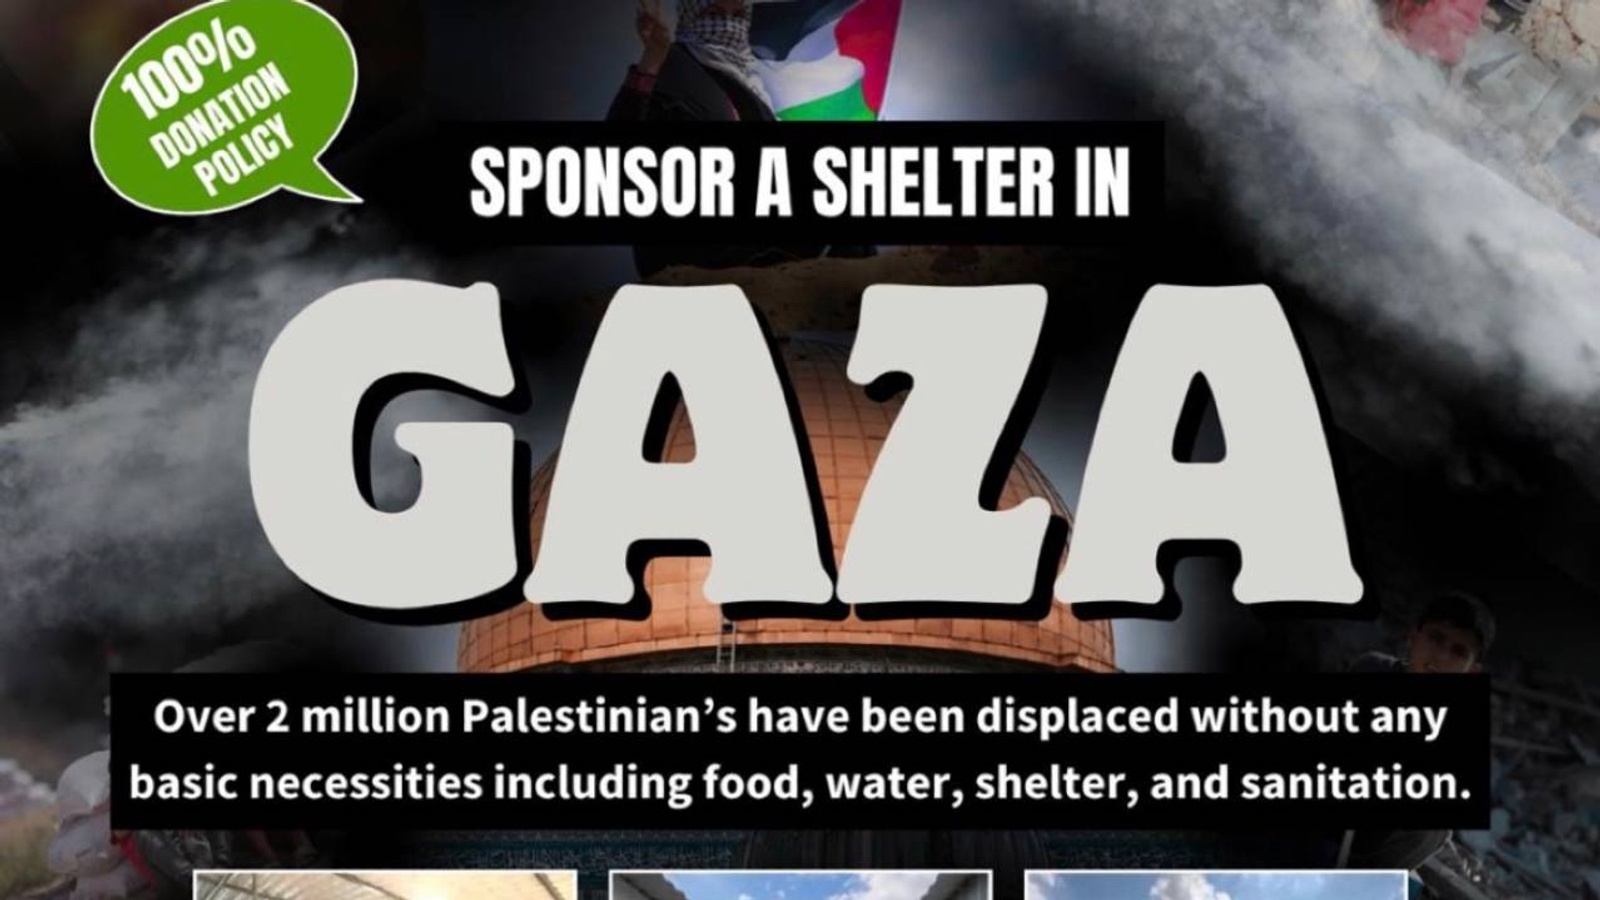 Zenab & Saunia Fundraising for Shelters in Gaza